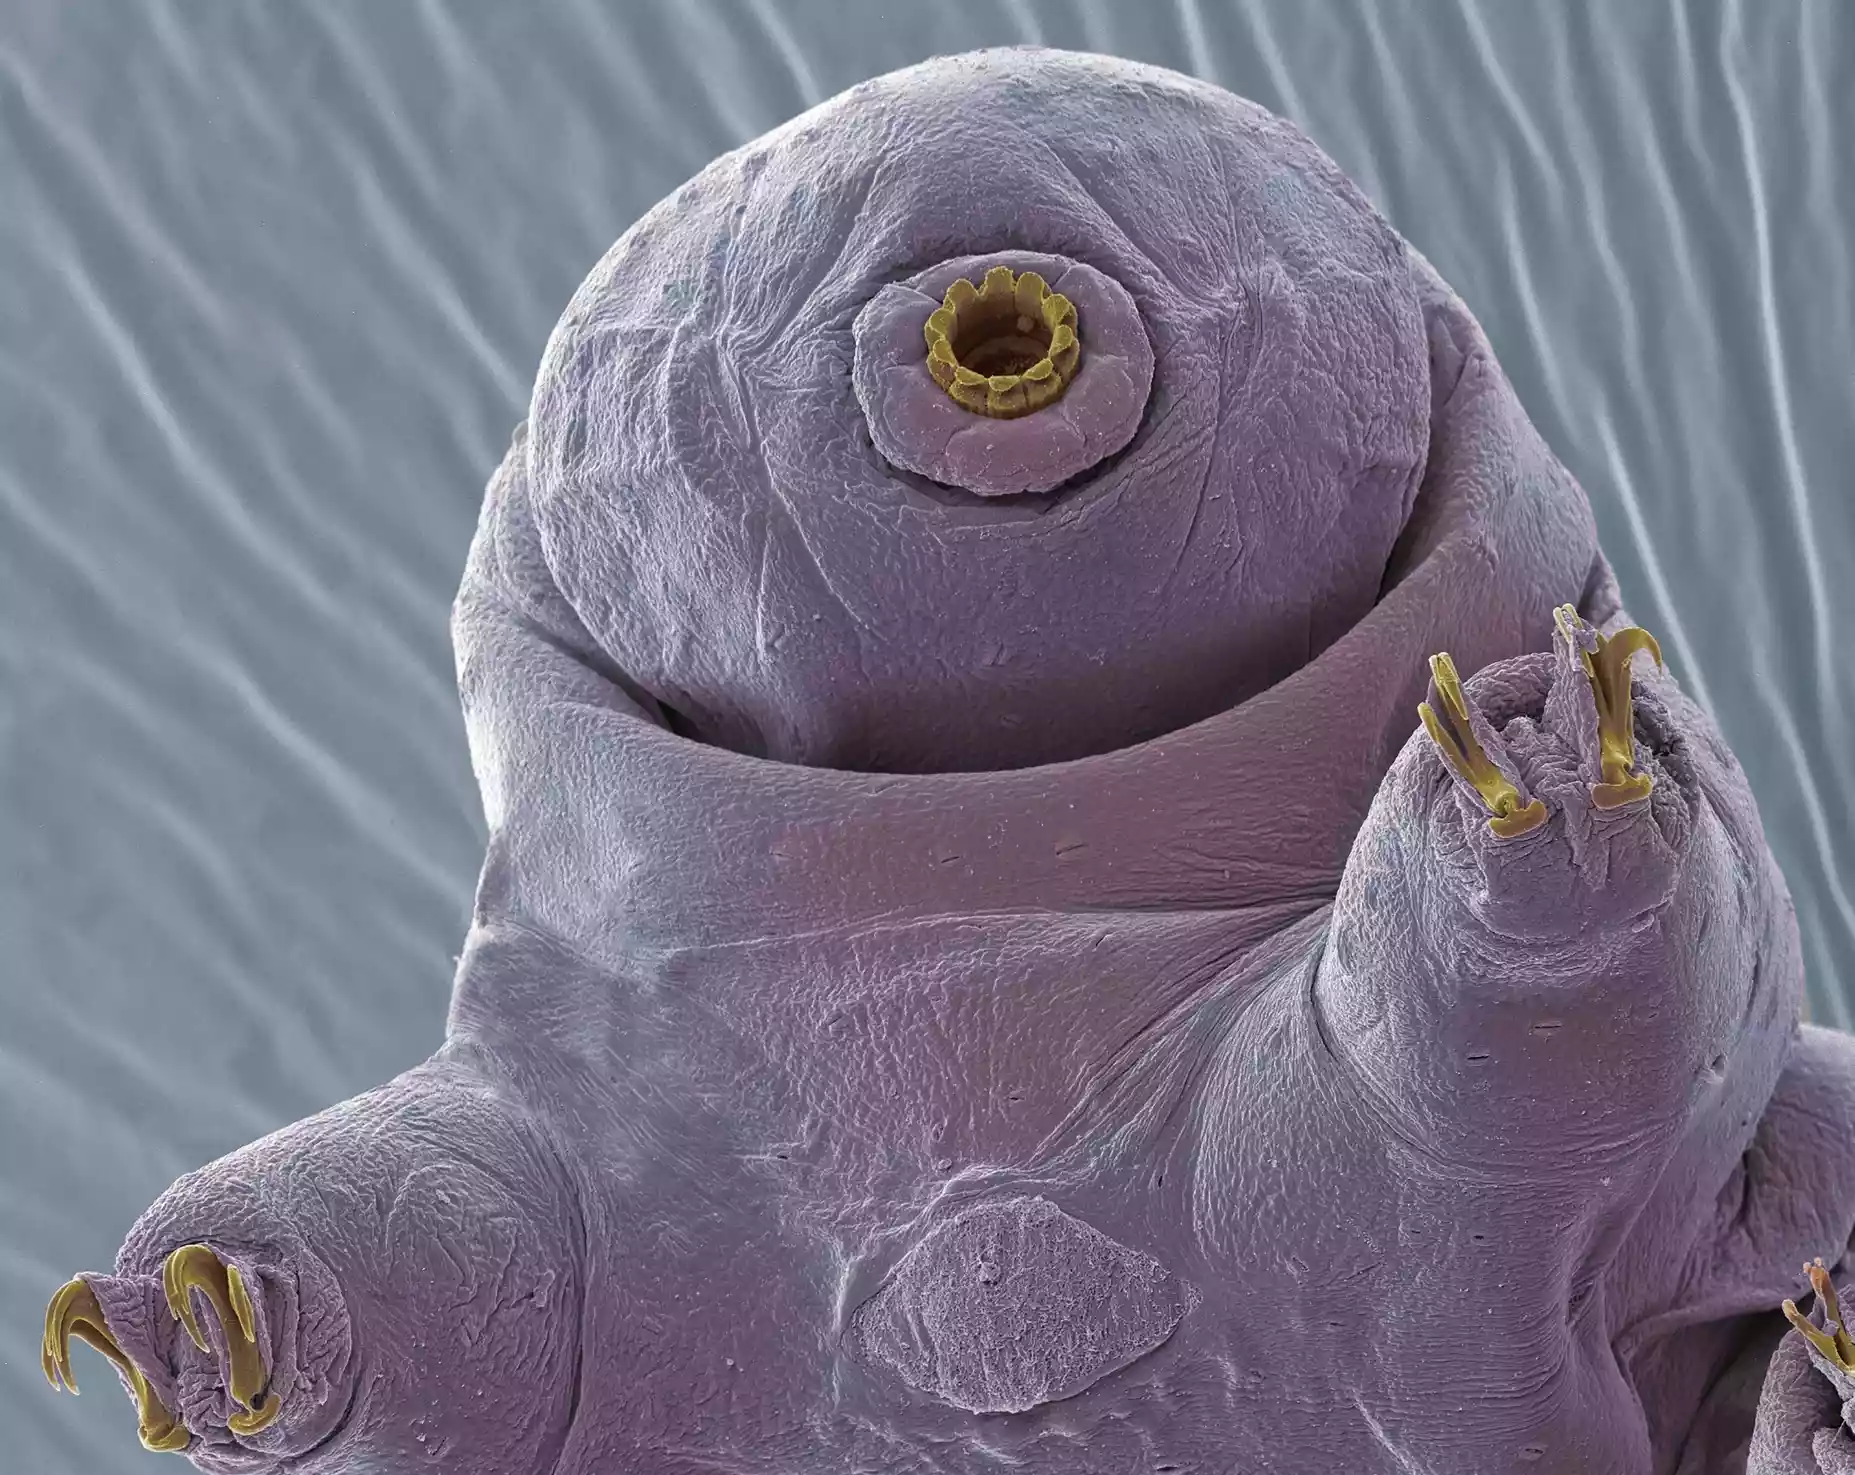 macro view of tardigrade head, magnified 1,000x